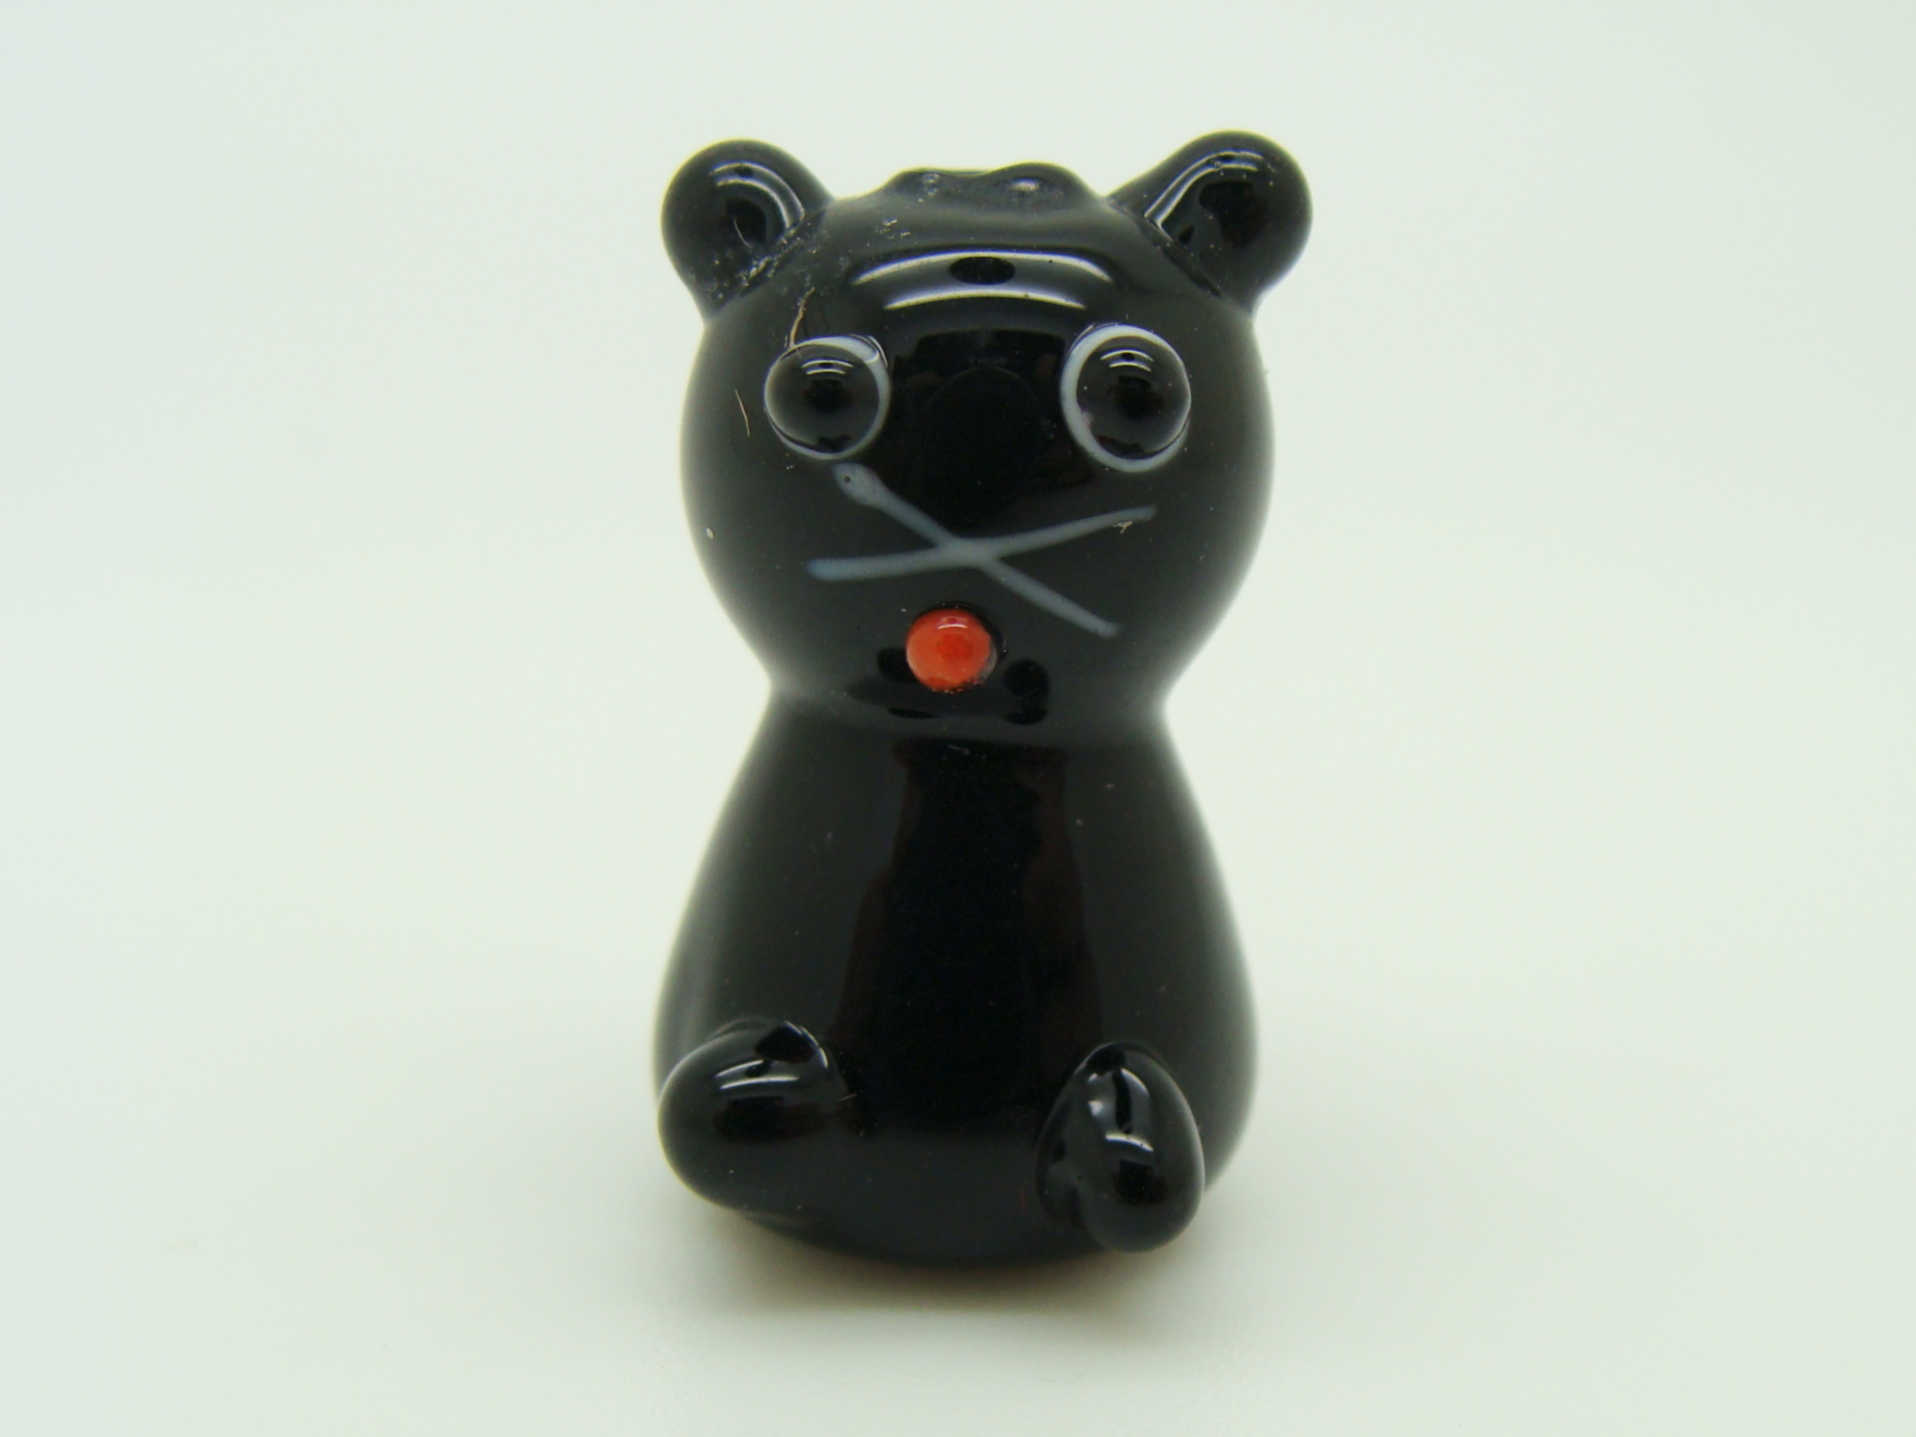 PV-lamp-29 perle chat noir verre animalPerle verre Lampwork Chat Noir 22mm par 1 pcperle chat noir verre